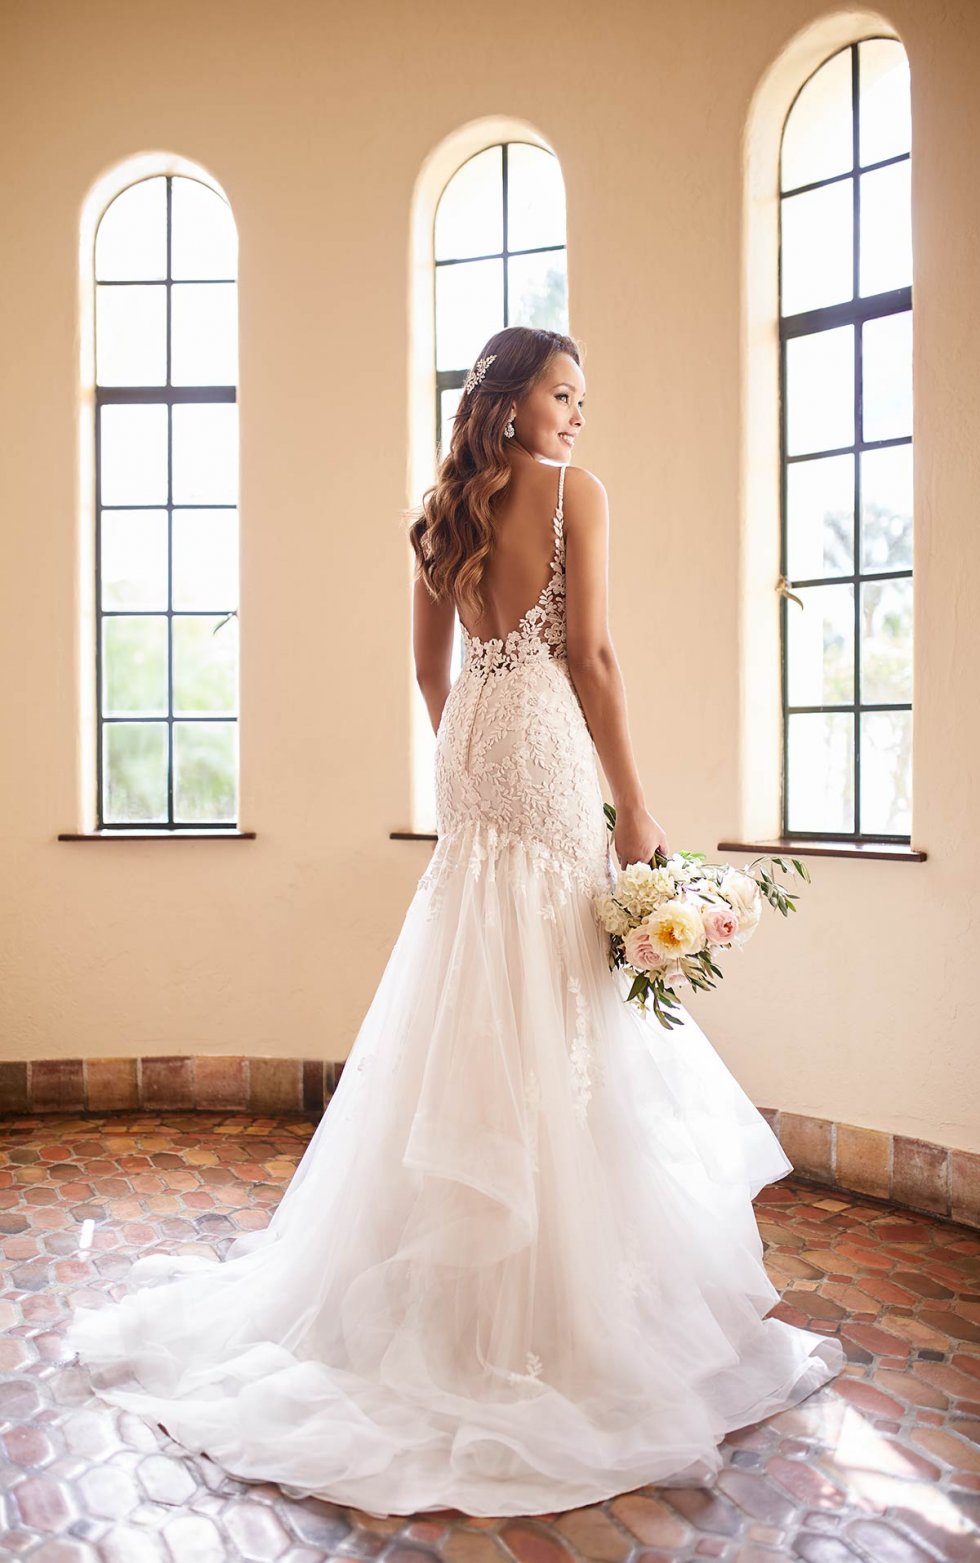 FishTail Plus Size Wedding Dress - off the peg wedding dress